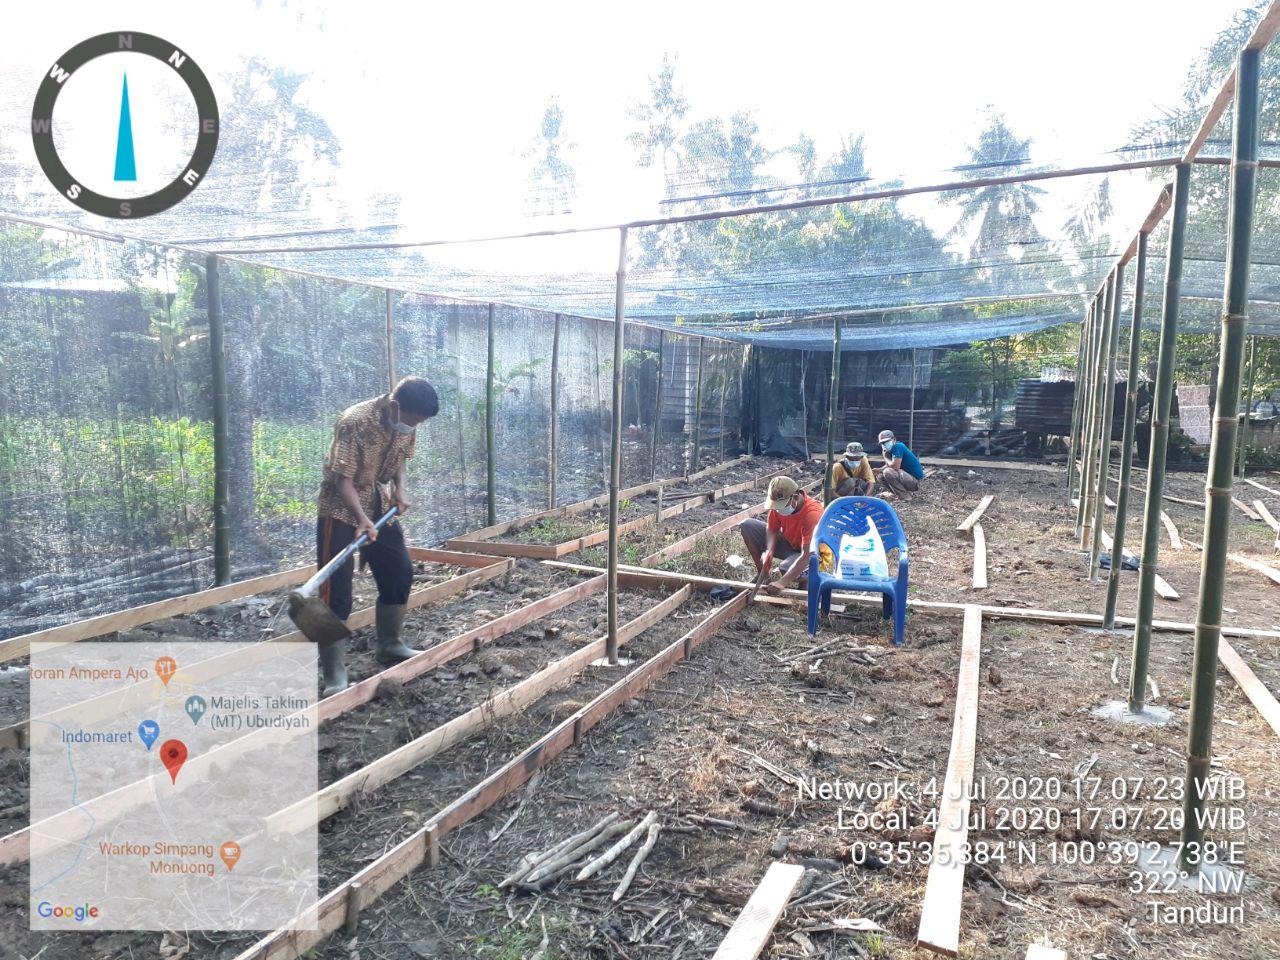  <p>Para petani menjalankan protokol kesehatan selama pembangunan kebun bibit desa untuk rehabilitasi di Hutan Desa Tandun. (Sumber Foto: Joko Surahmad)</p>